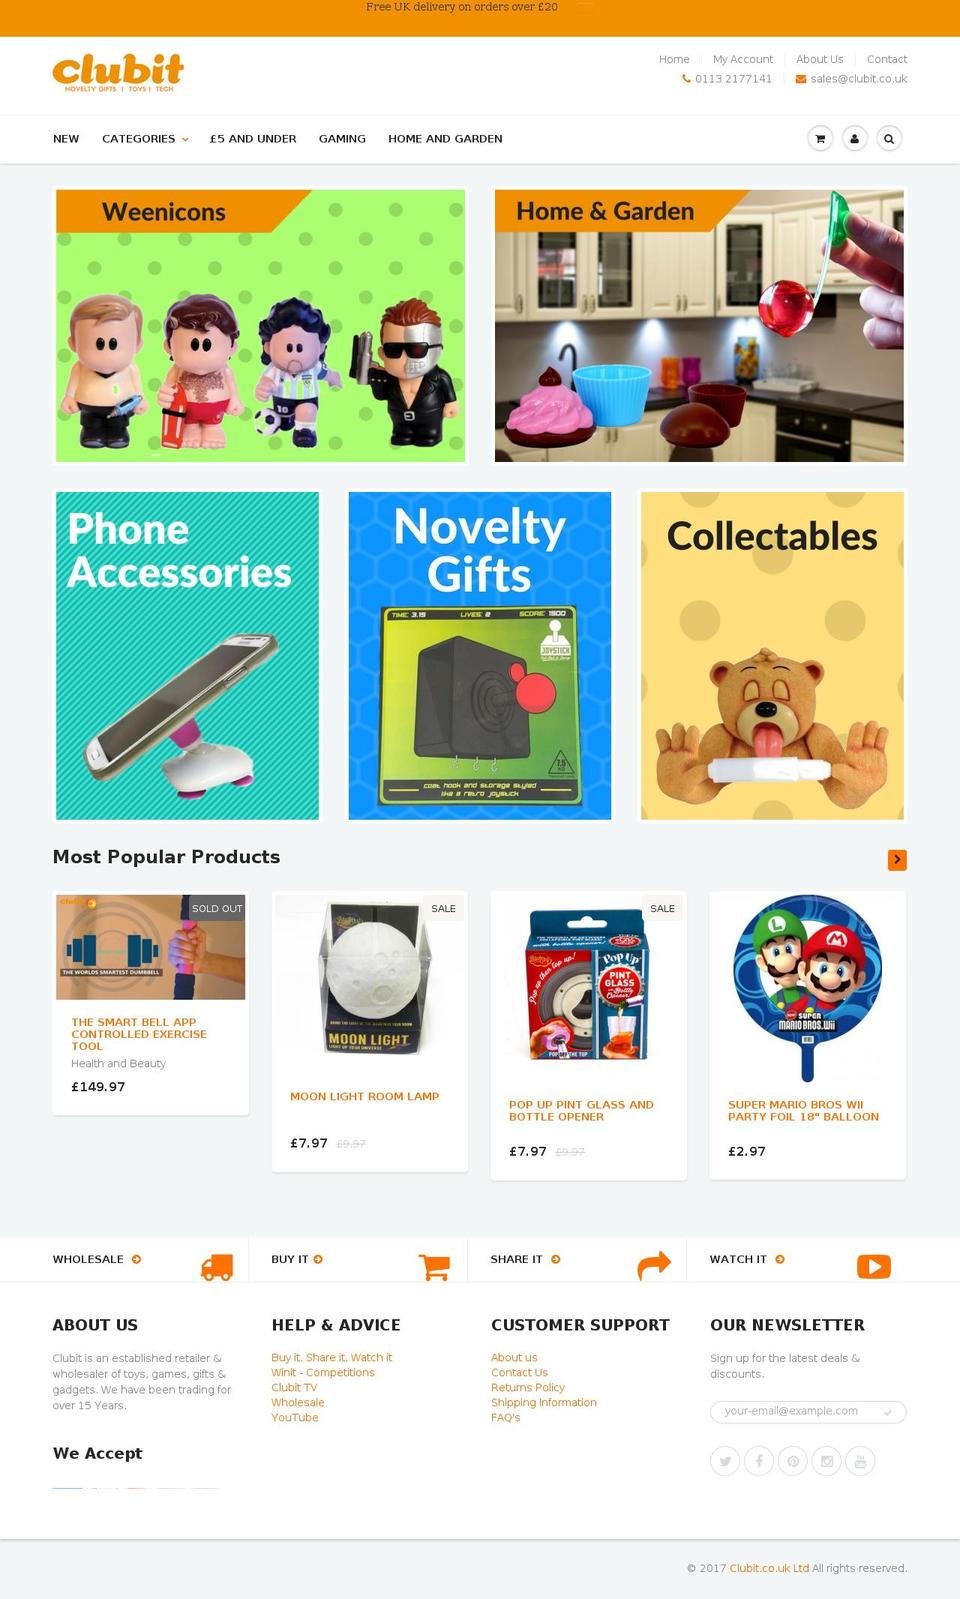 clubit.co.uk shopify website screenshot